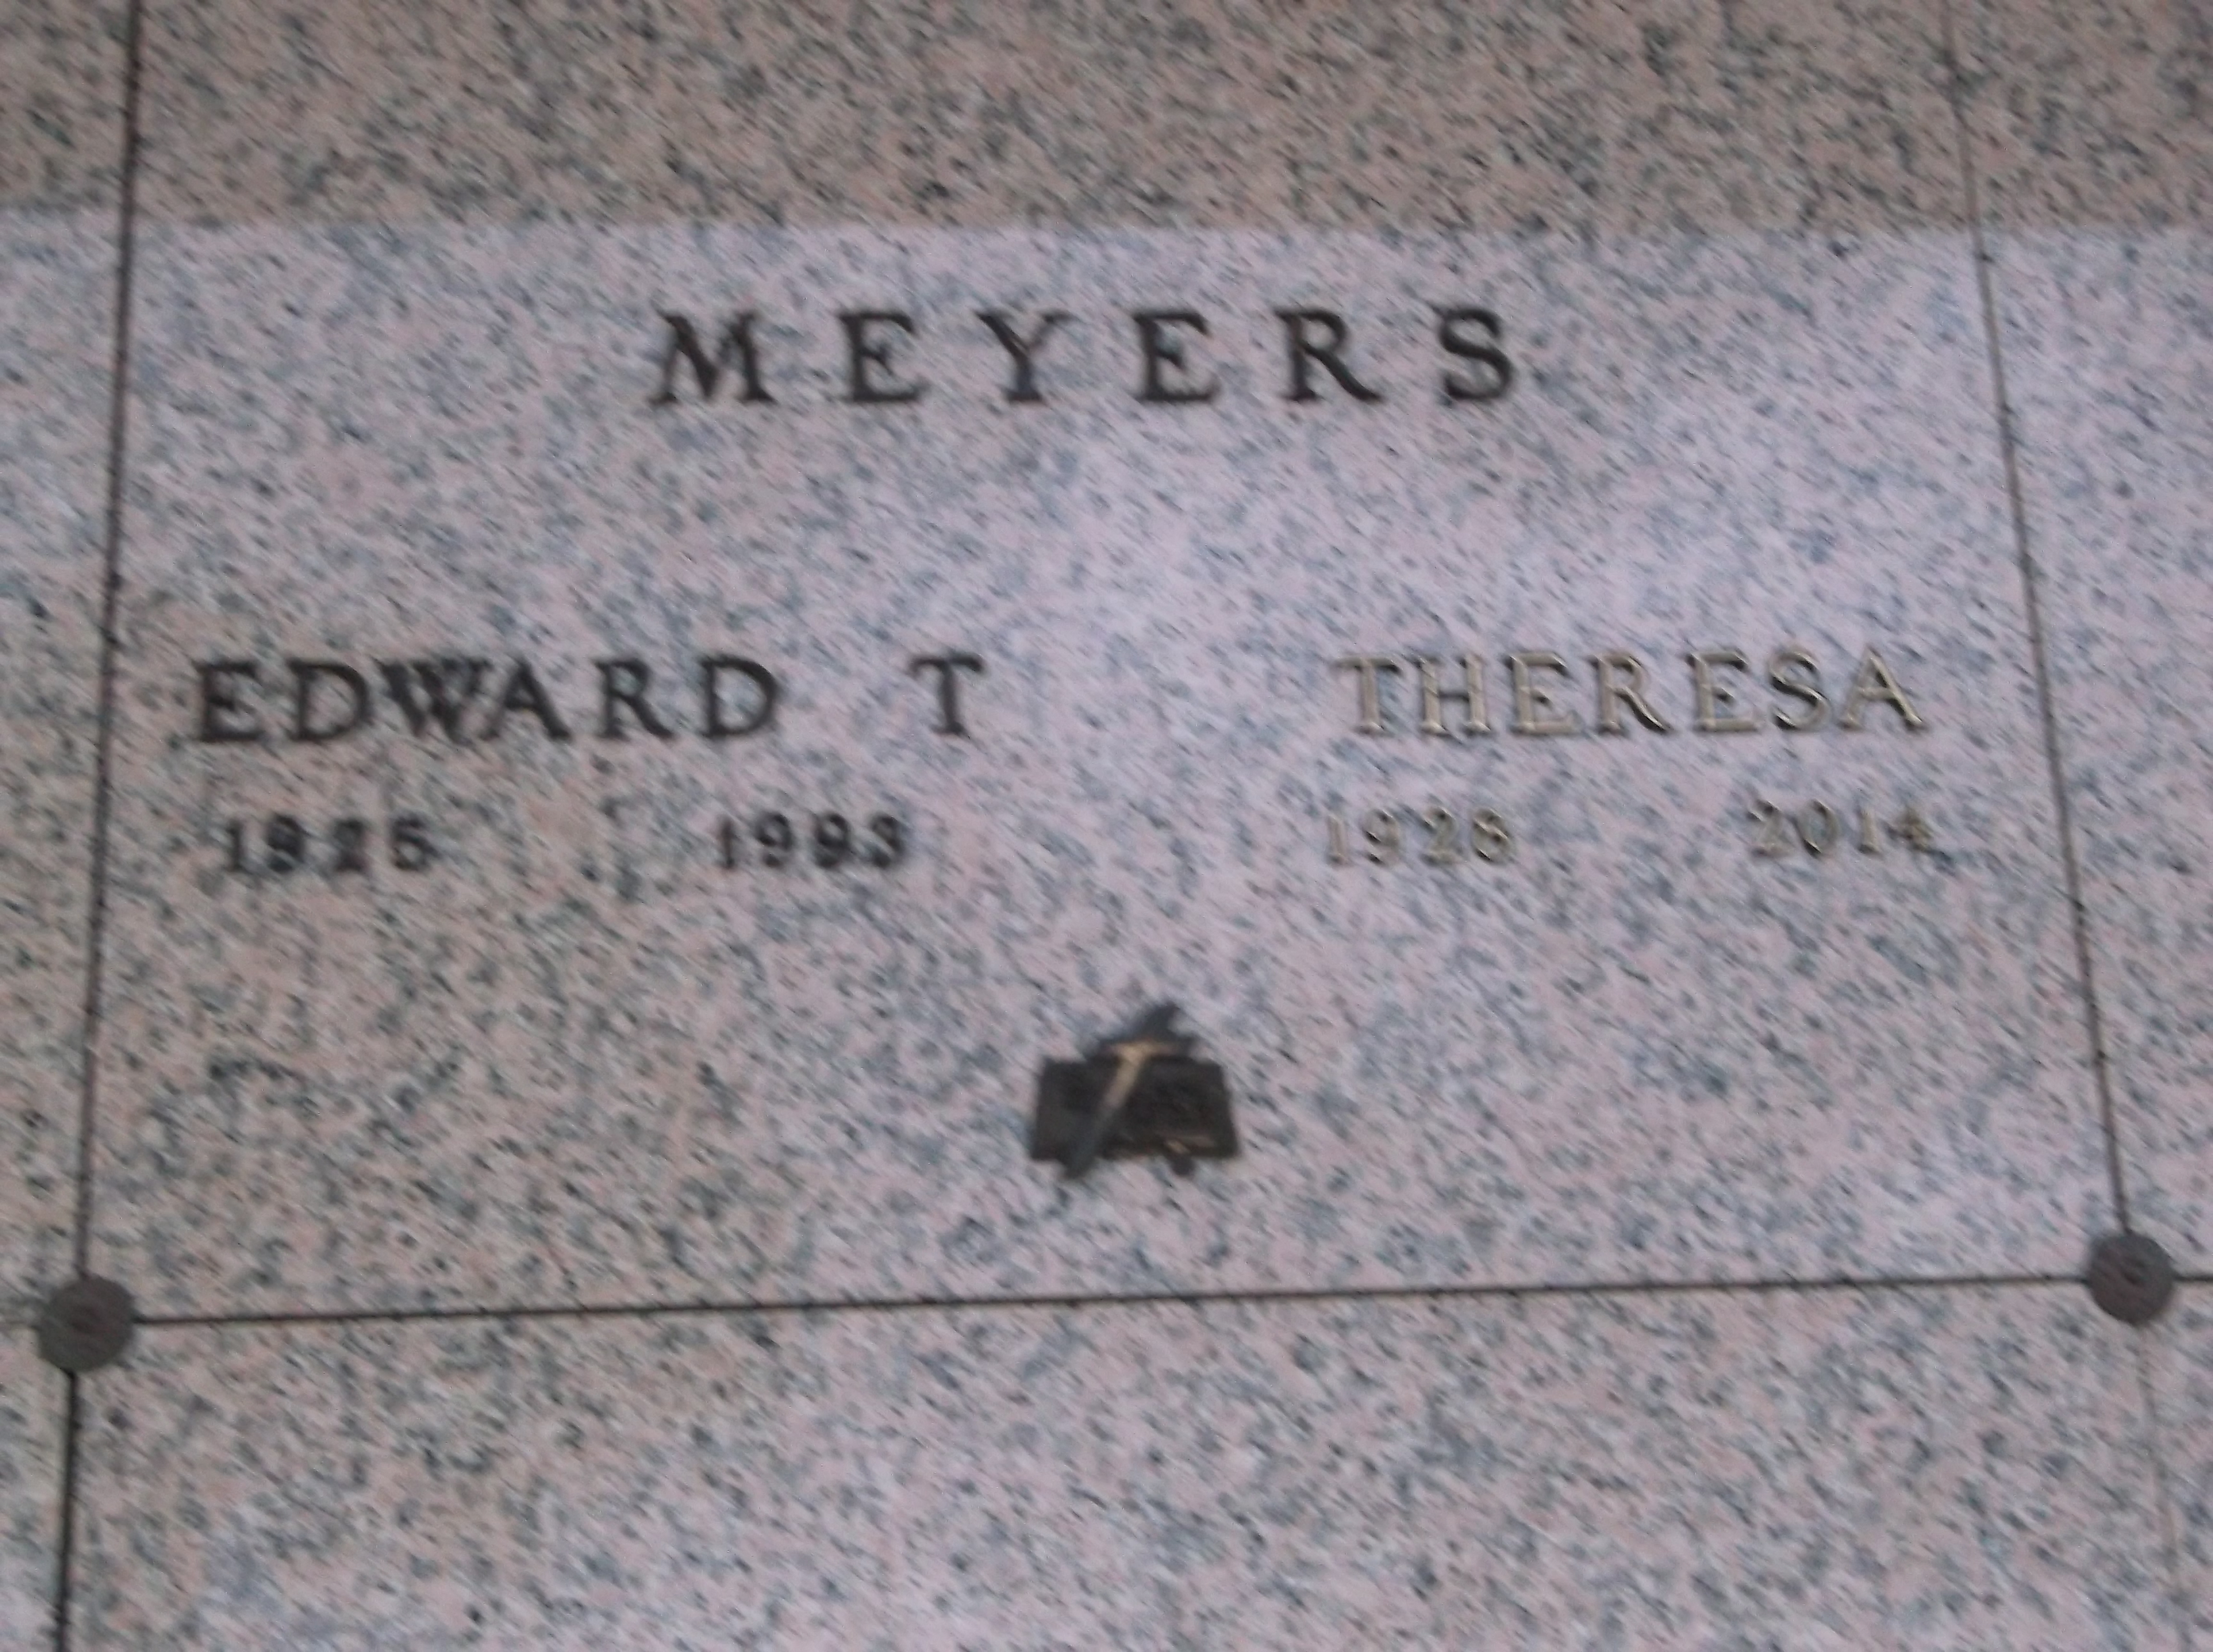 Edward T Meyers